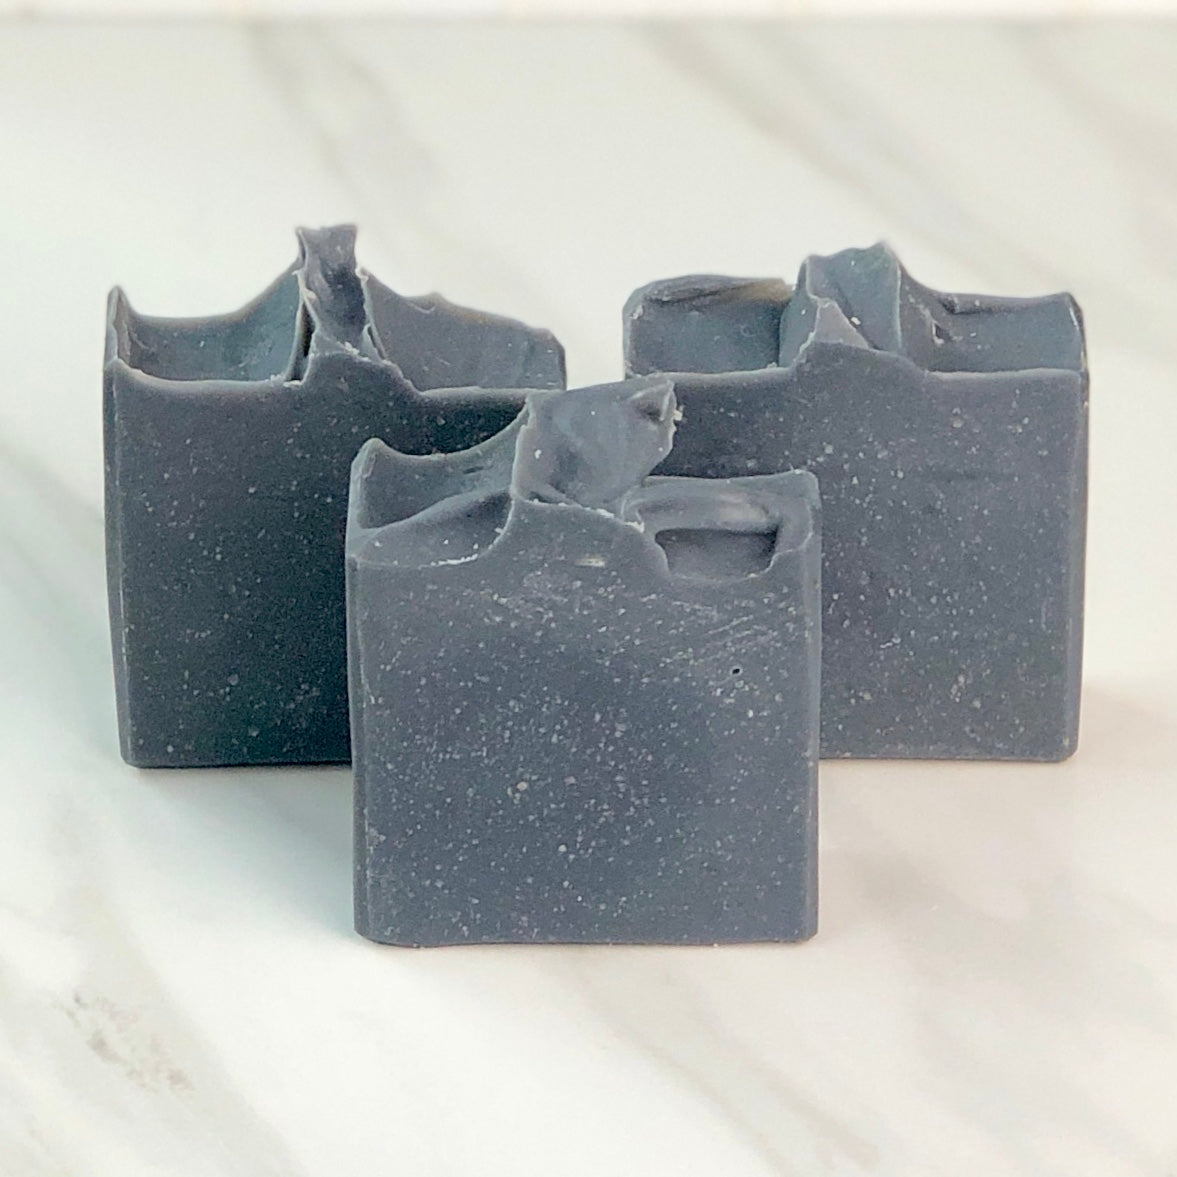 Charcoal + Tea Tree Soap